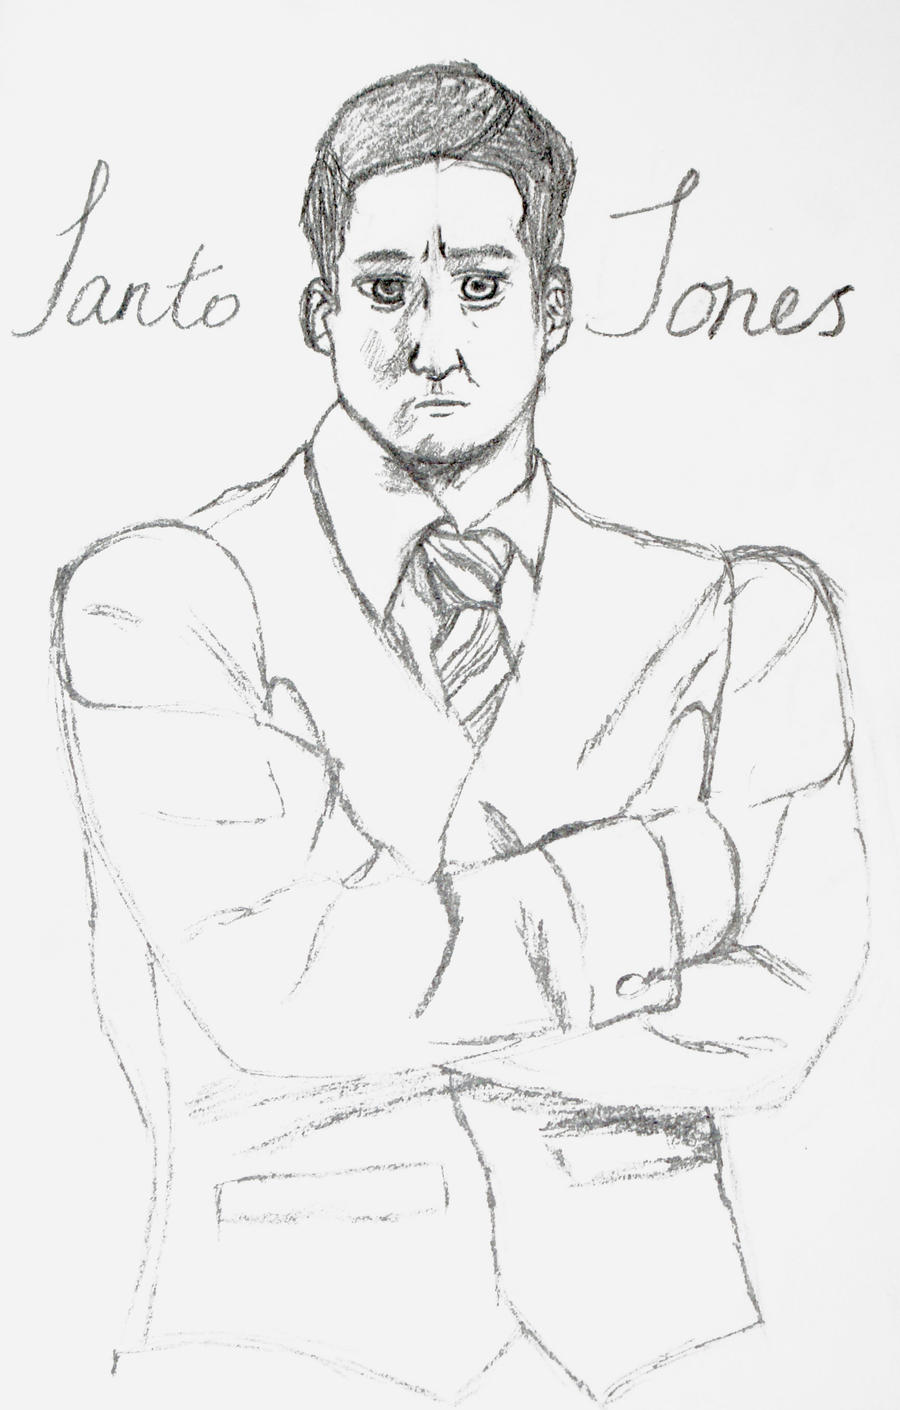 Ianto Jones